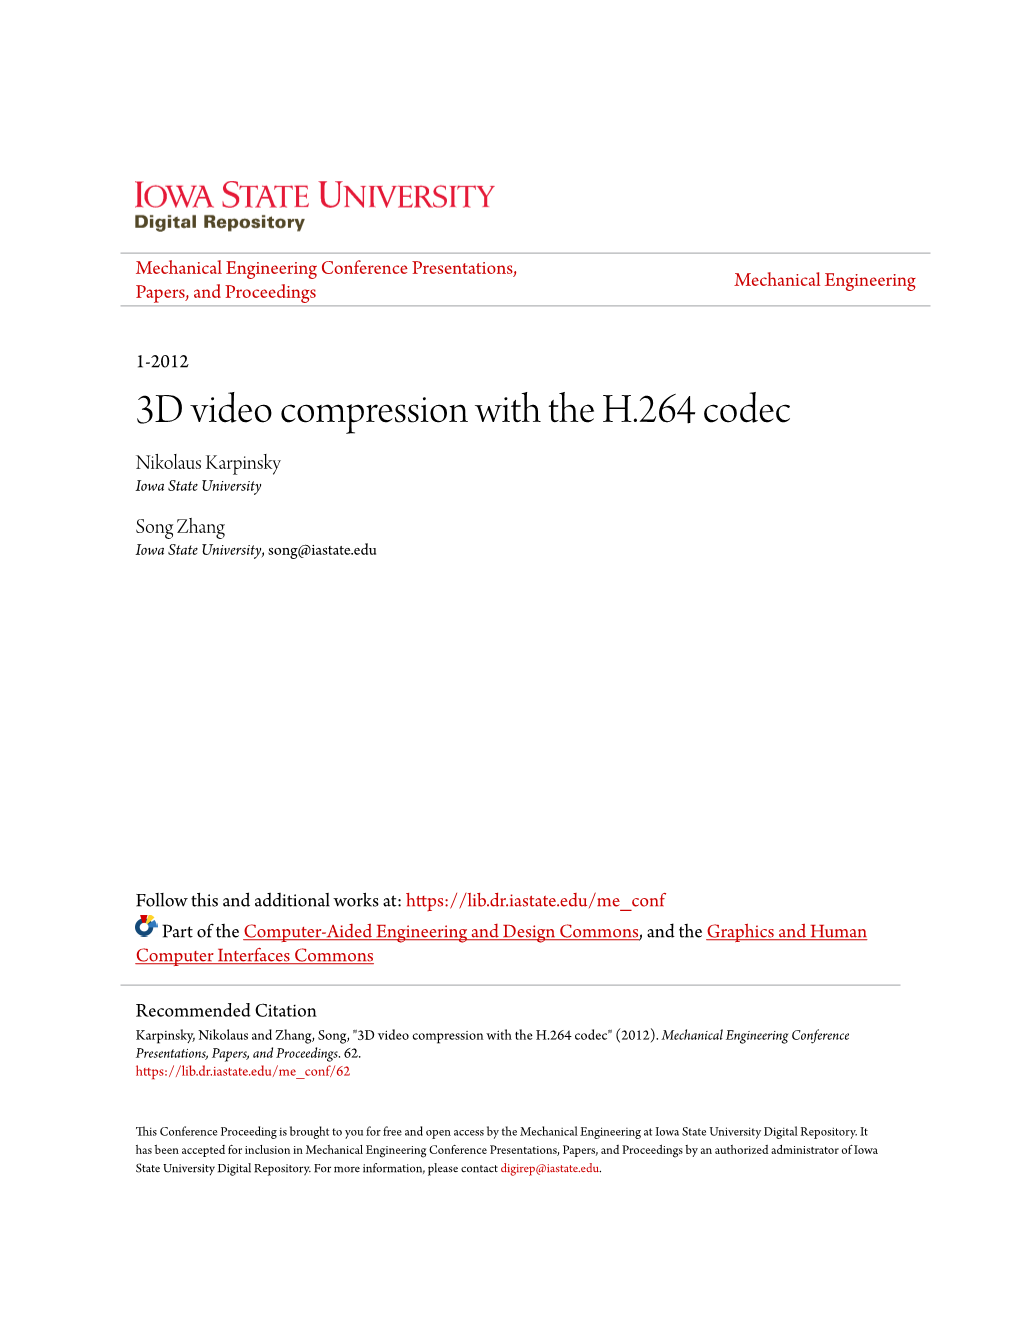 3D Video Compression with the H.264 Codec Nikolaus Karpinsky Iowa State University